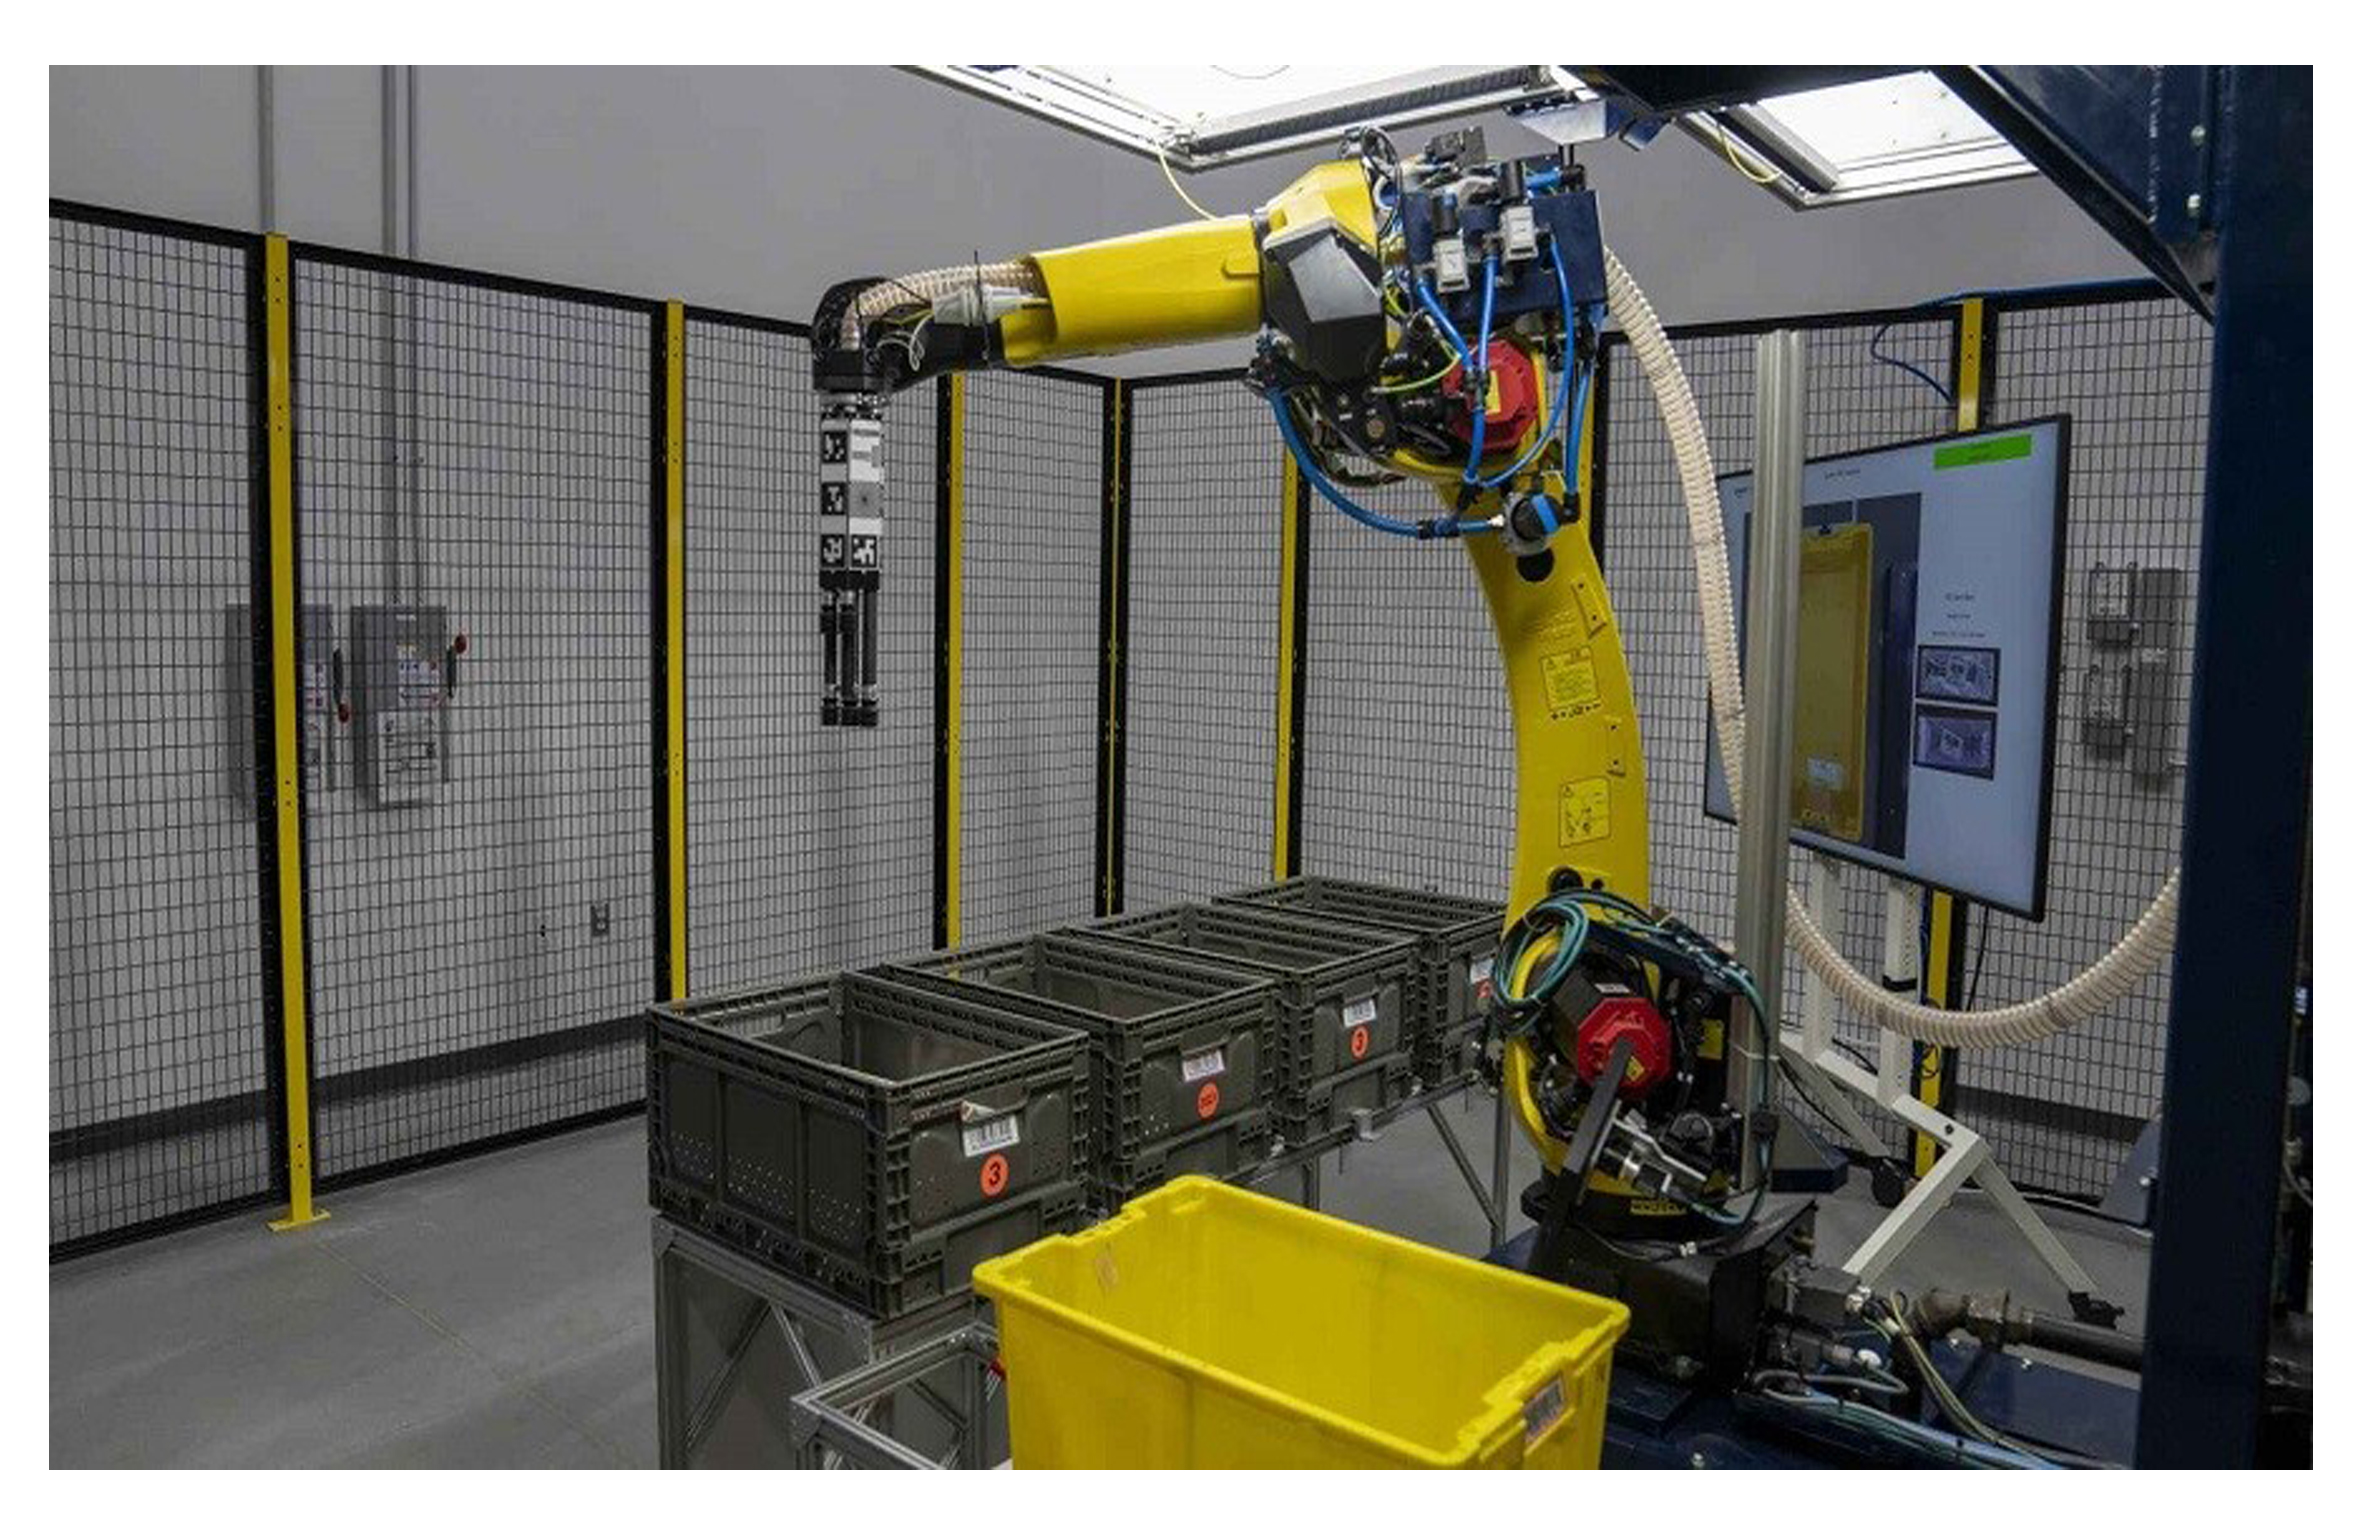 Untitled-1gvlukghluih دنیای نو - ربات جدید آمازون از هوش مصنوعی برای تشخیص اشیاء کمک می‌گیرد